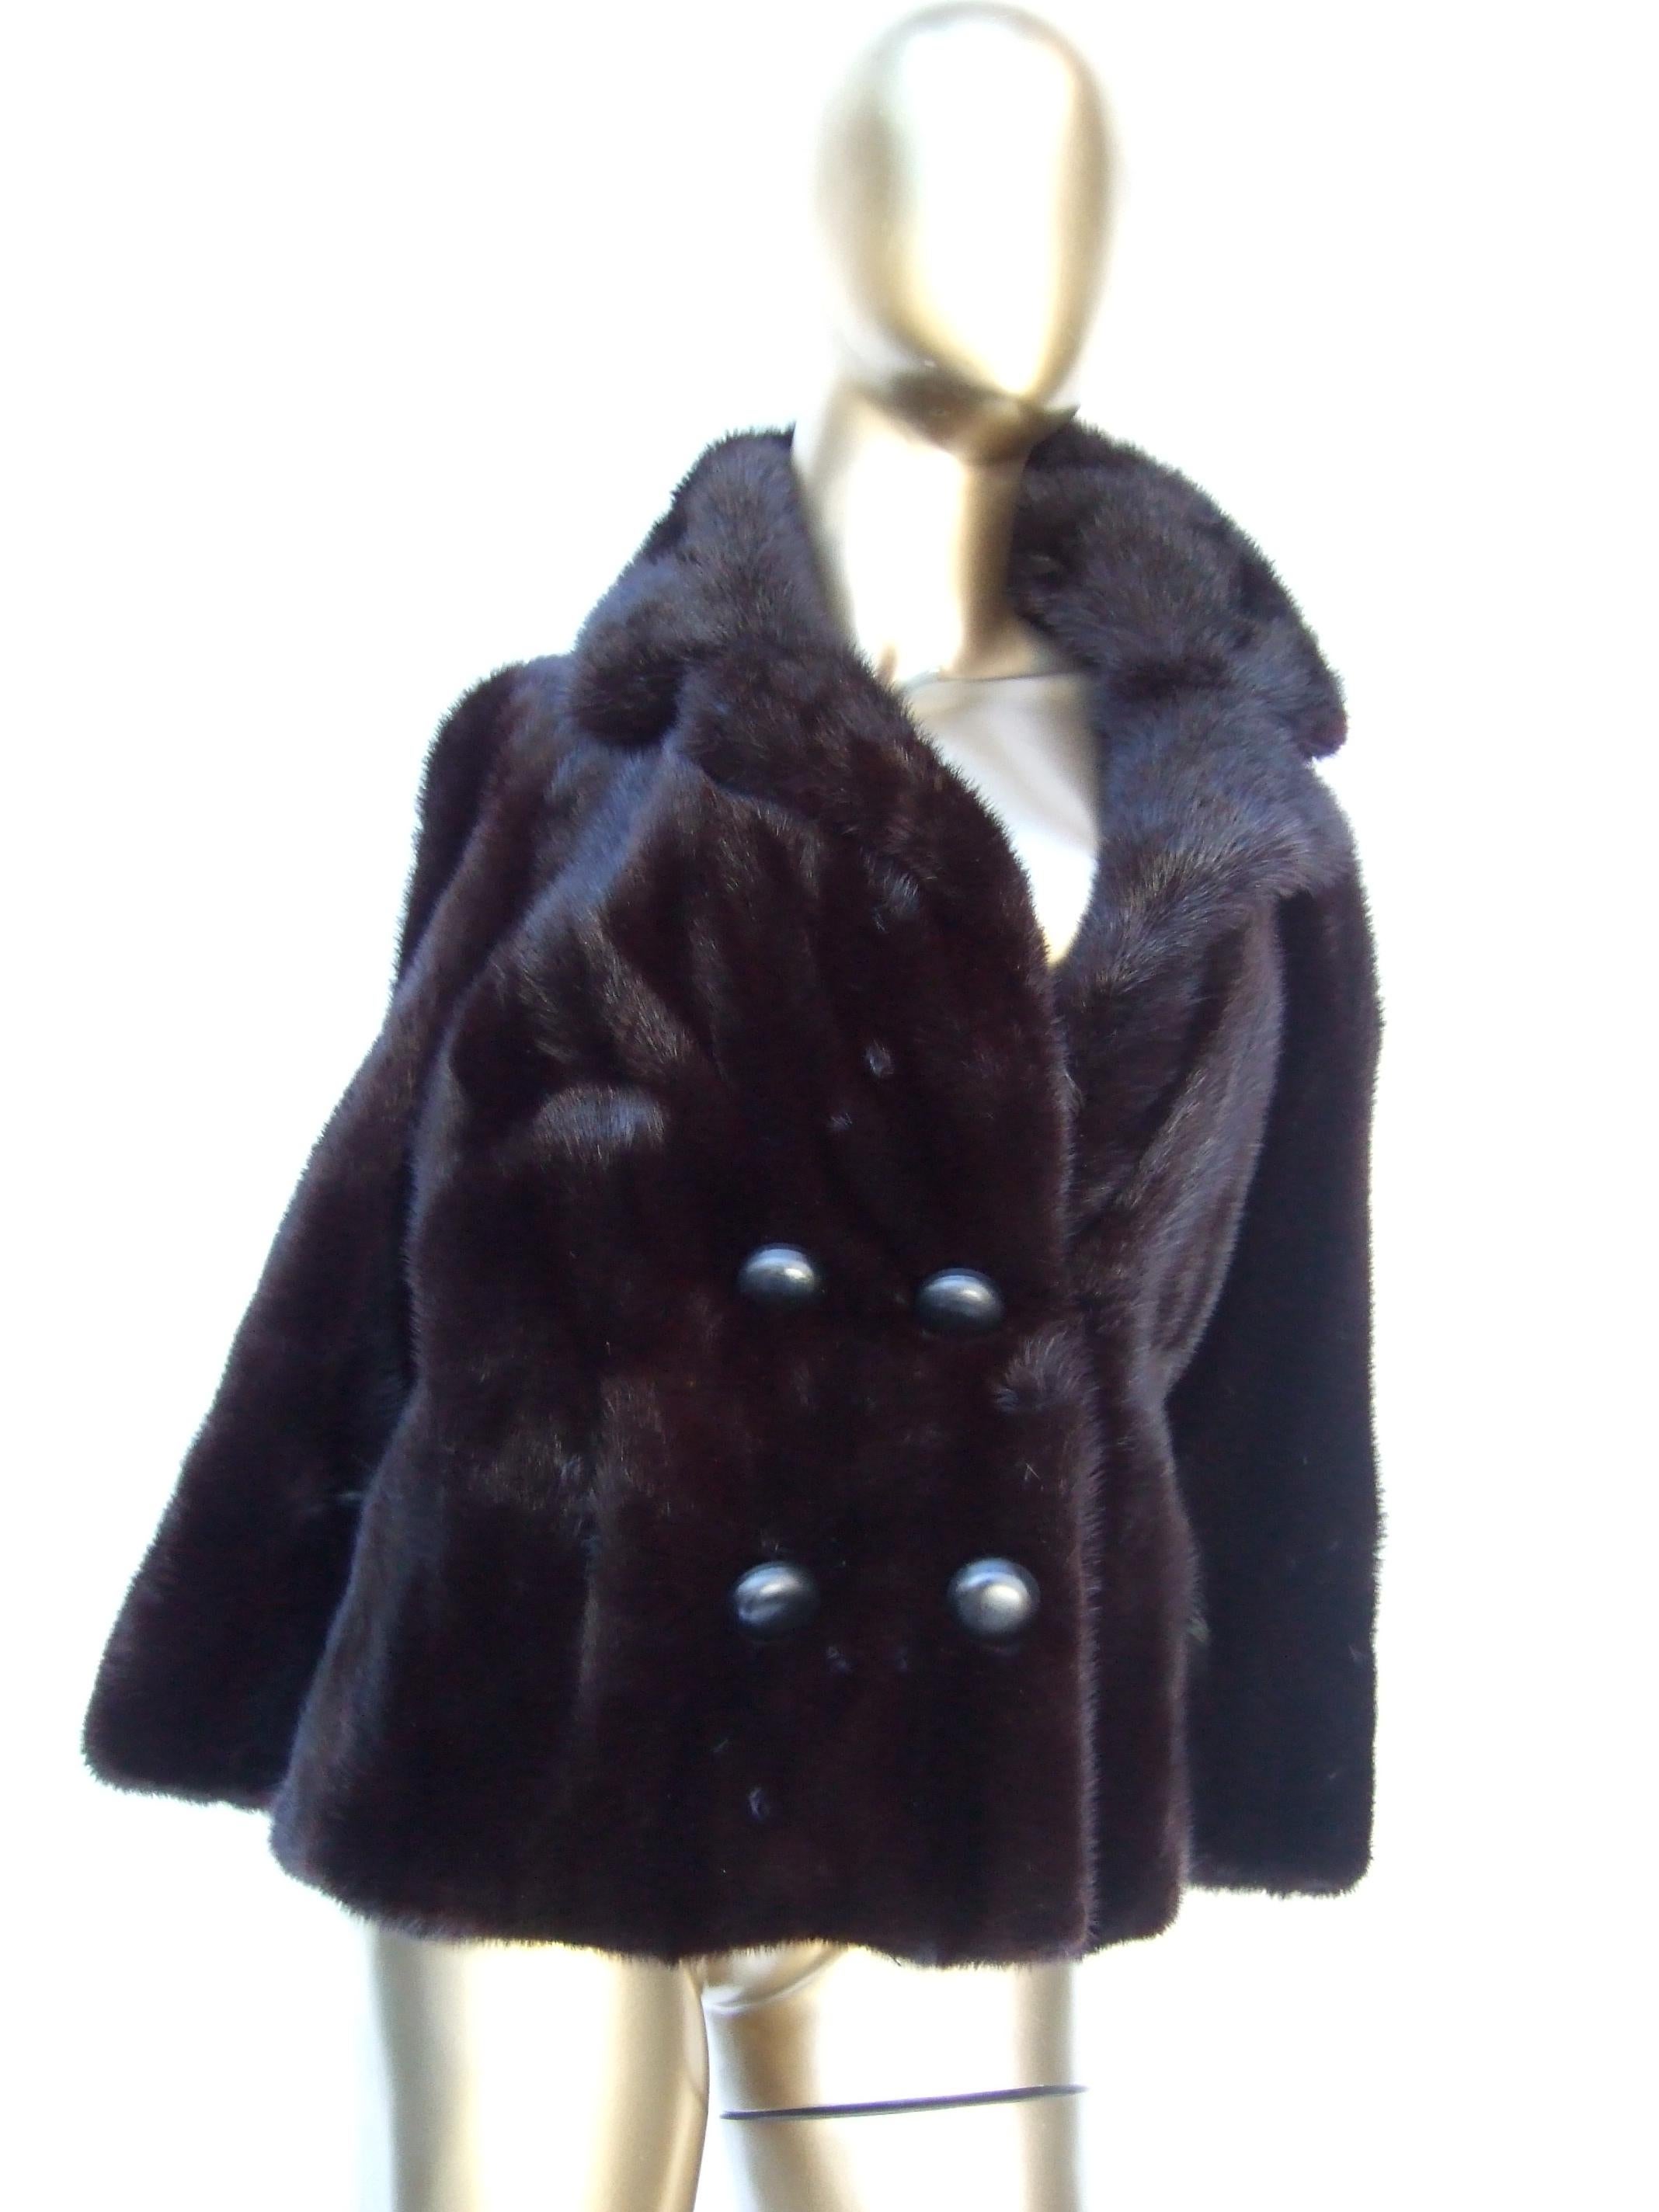 Black Luxurious Mahogany Plush Dark Brown Mink Fur Jacket by Bill Marre' c 1970s 